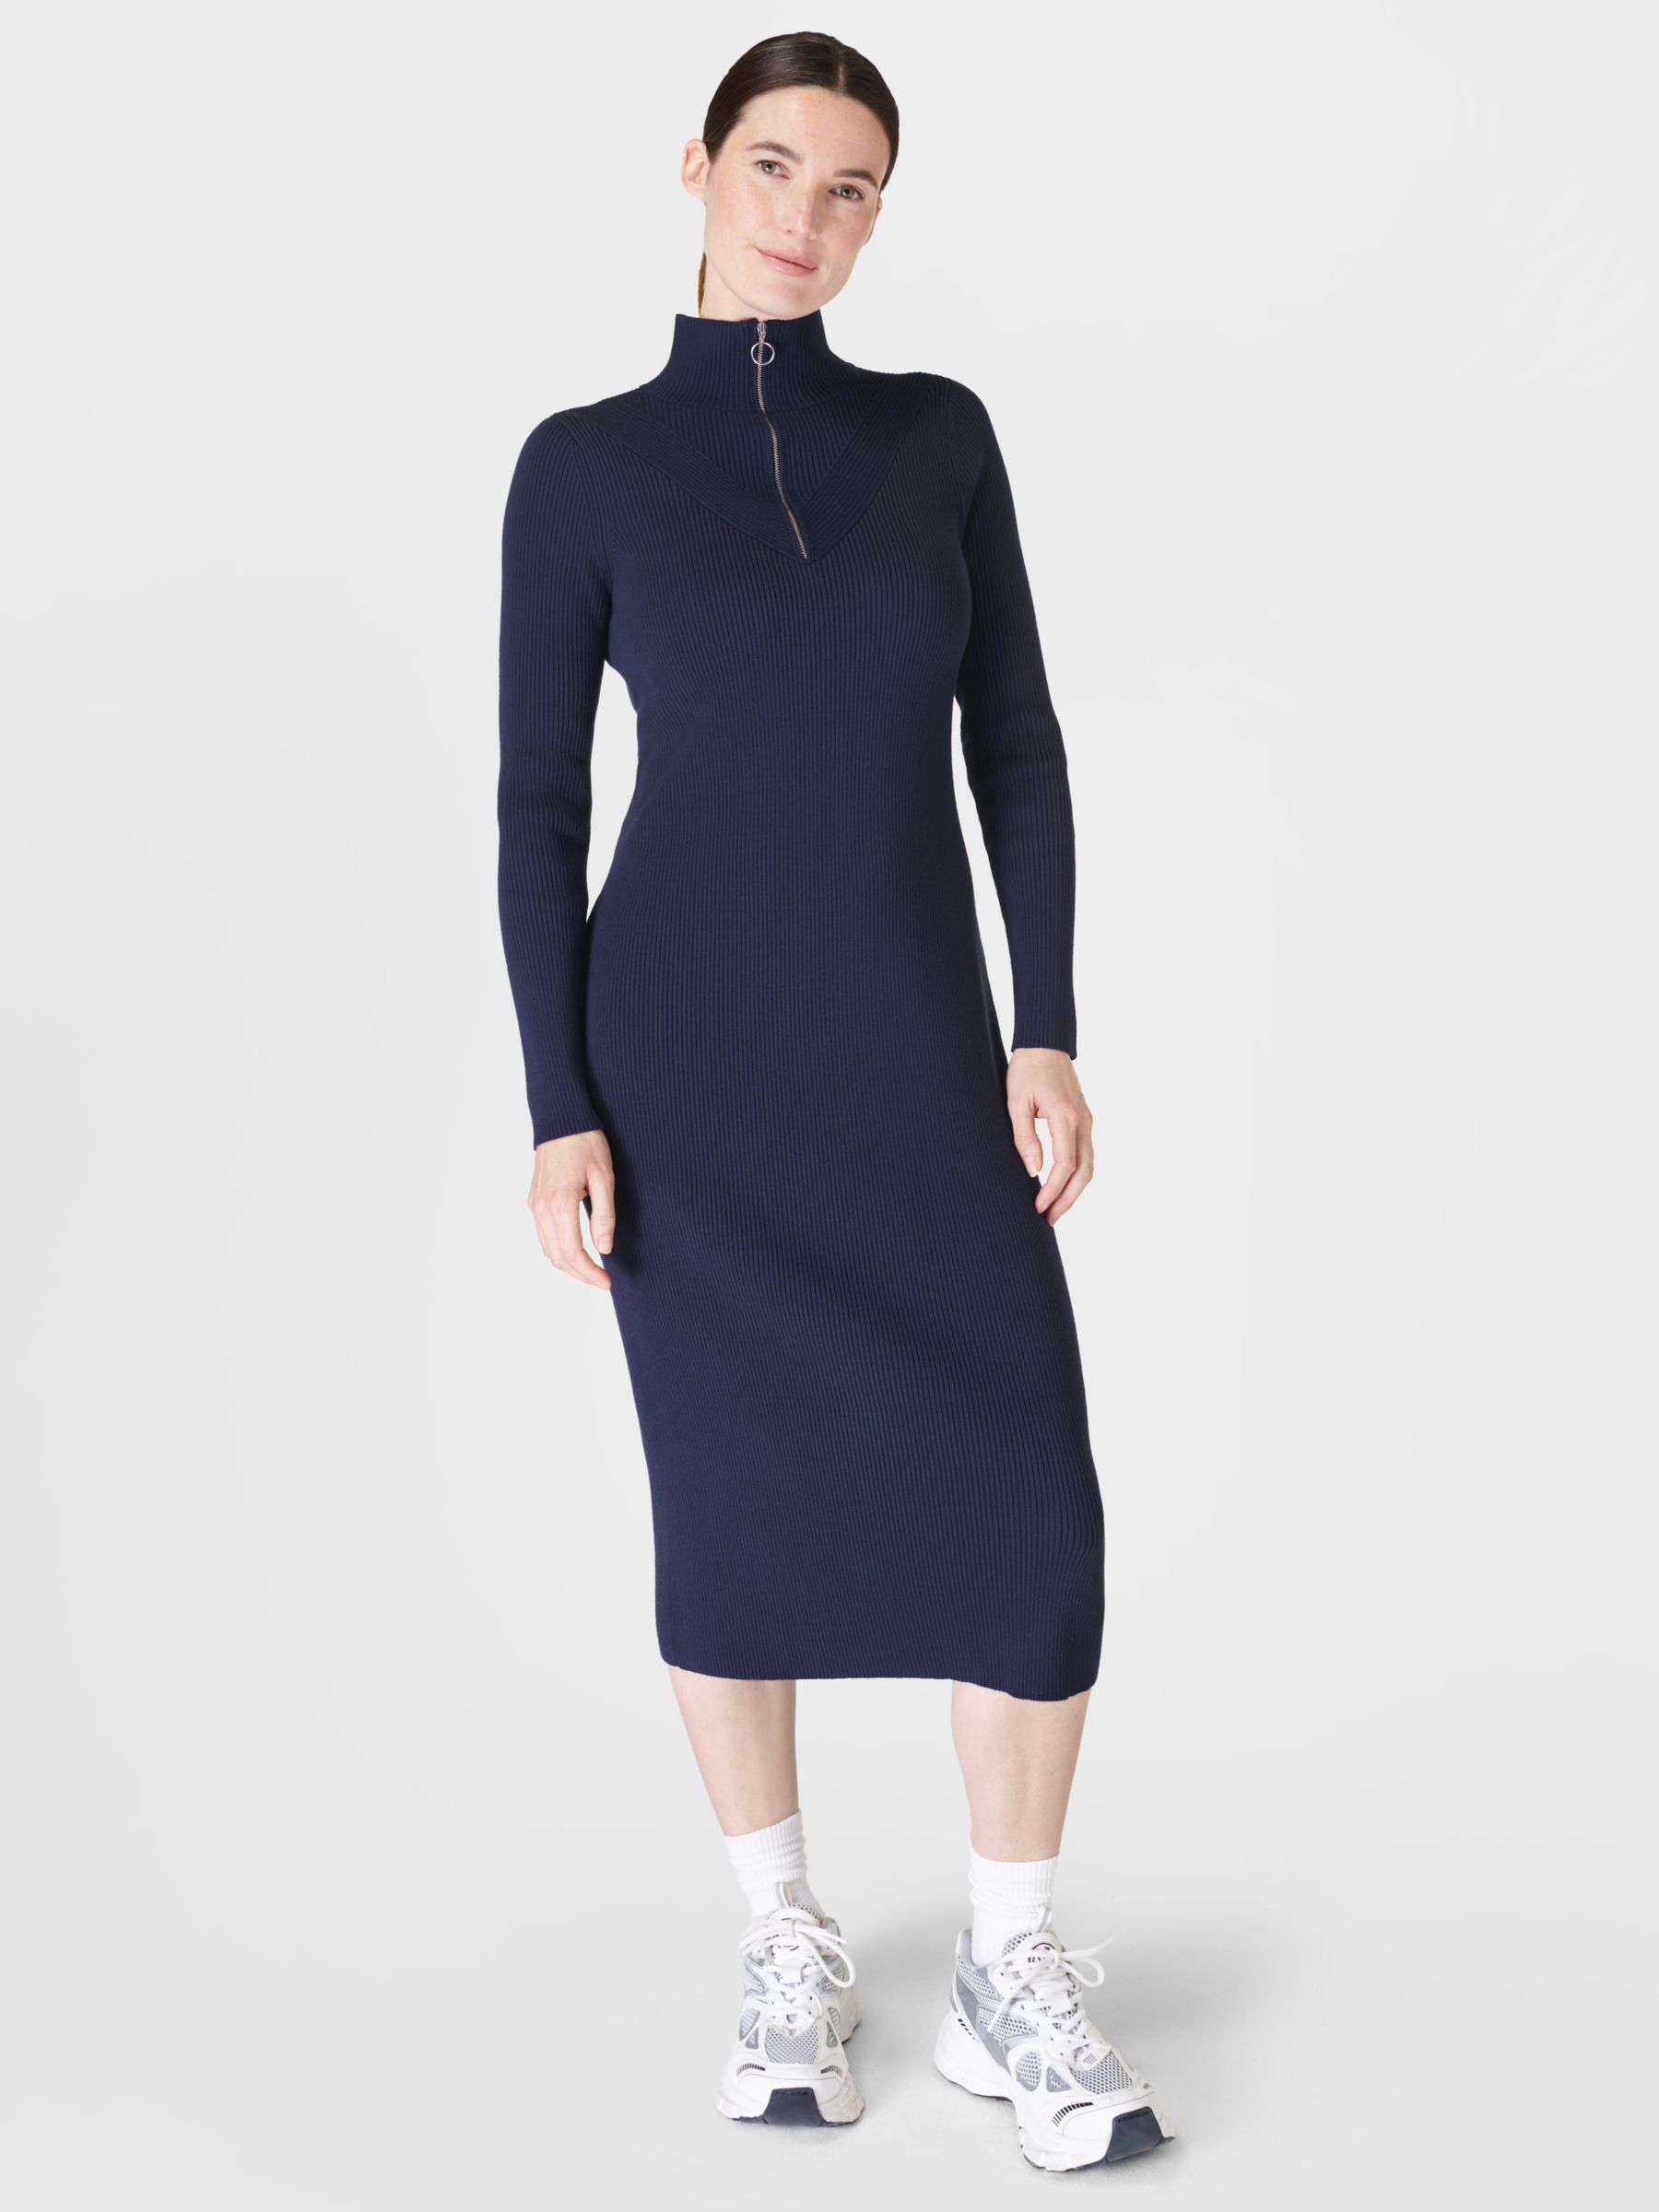 Sweaty Betty Frame Knit Midi Dress, Navy Blue at John Lewis & Partners